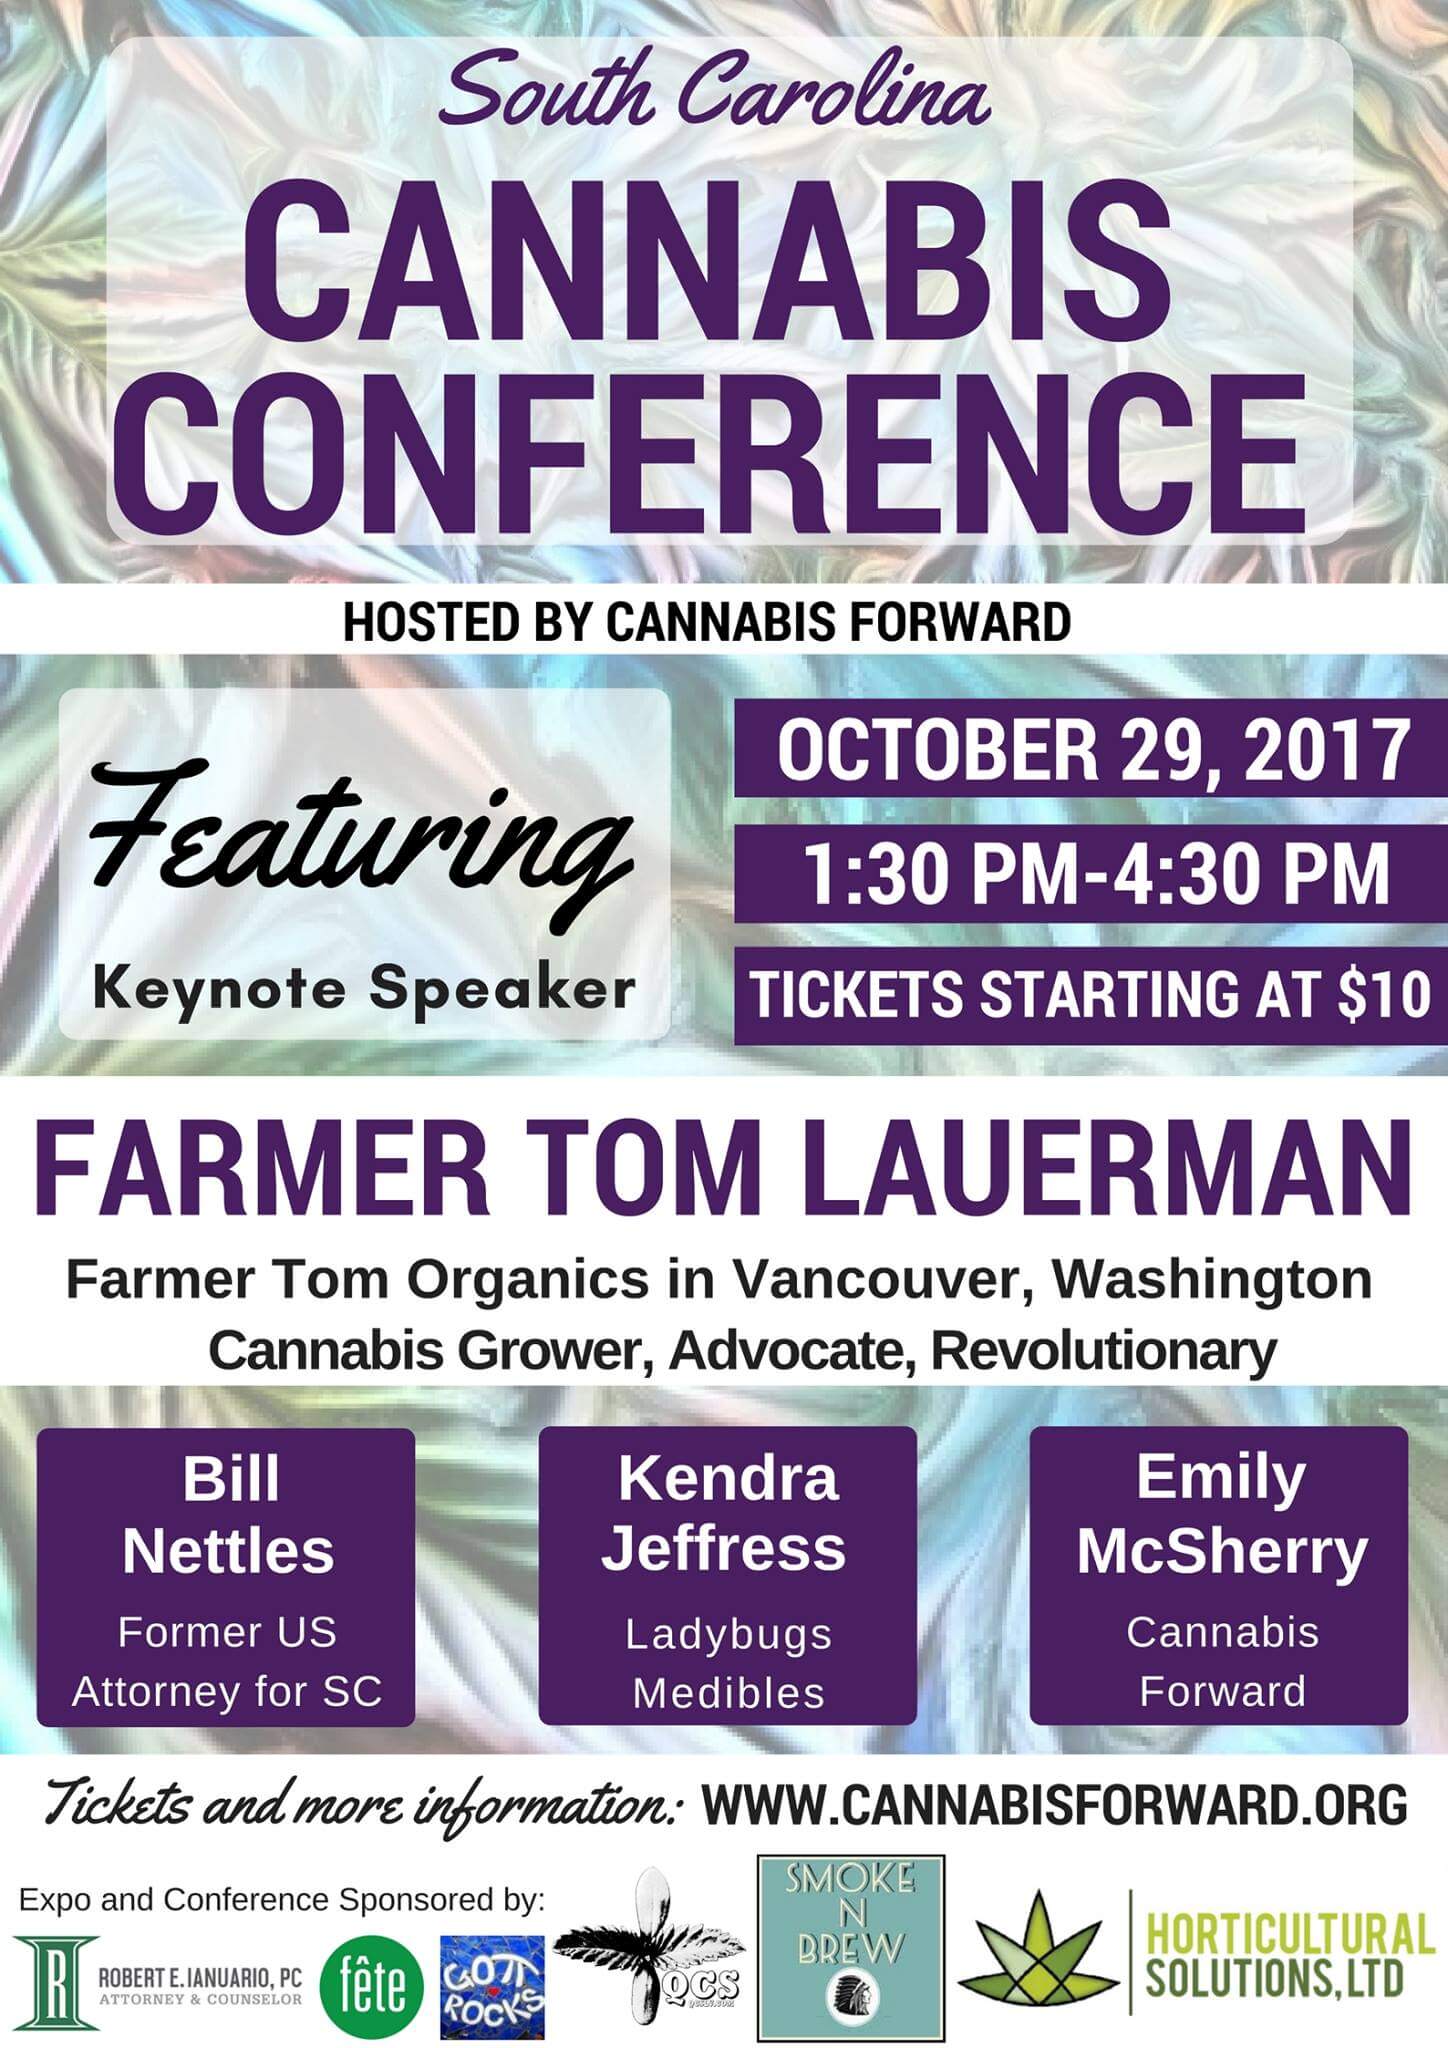 Cannabis Forward Cannabis Conference - SC Compassionate Care Alliance